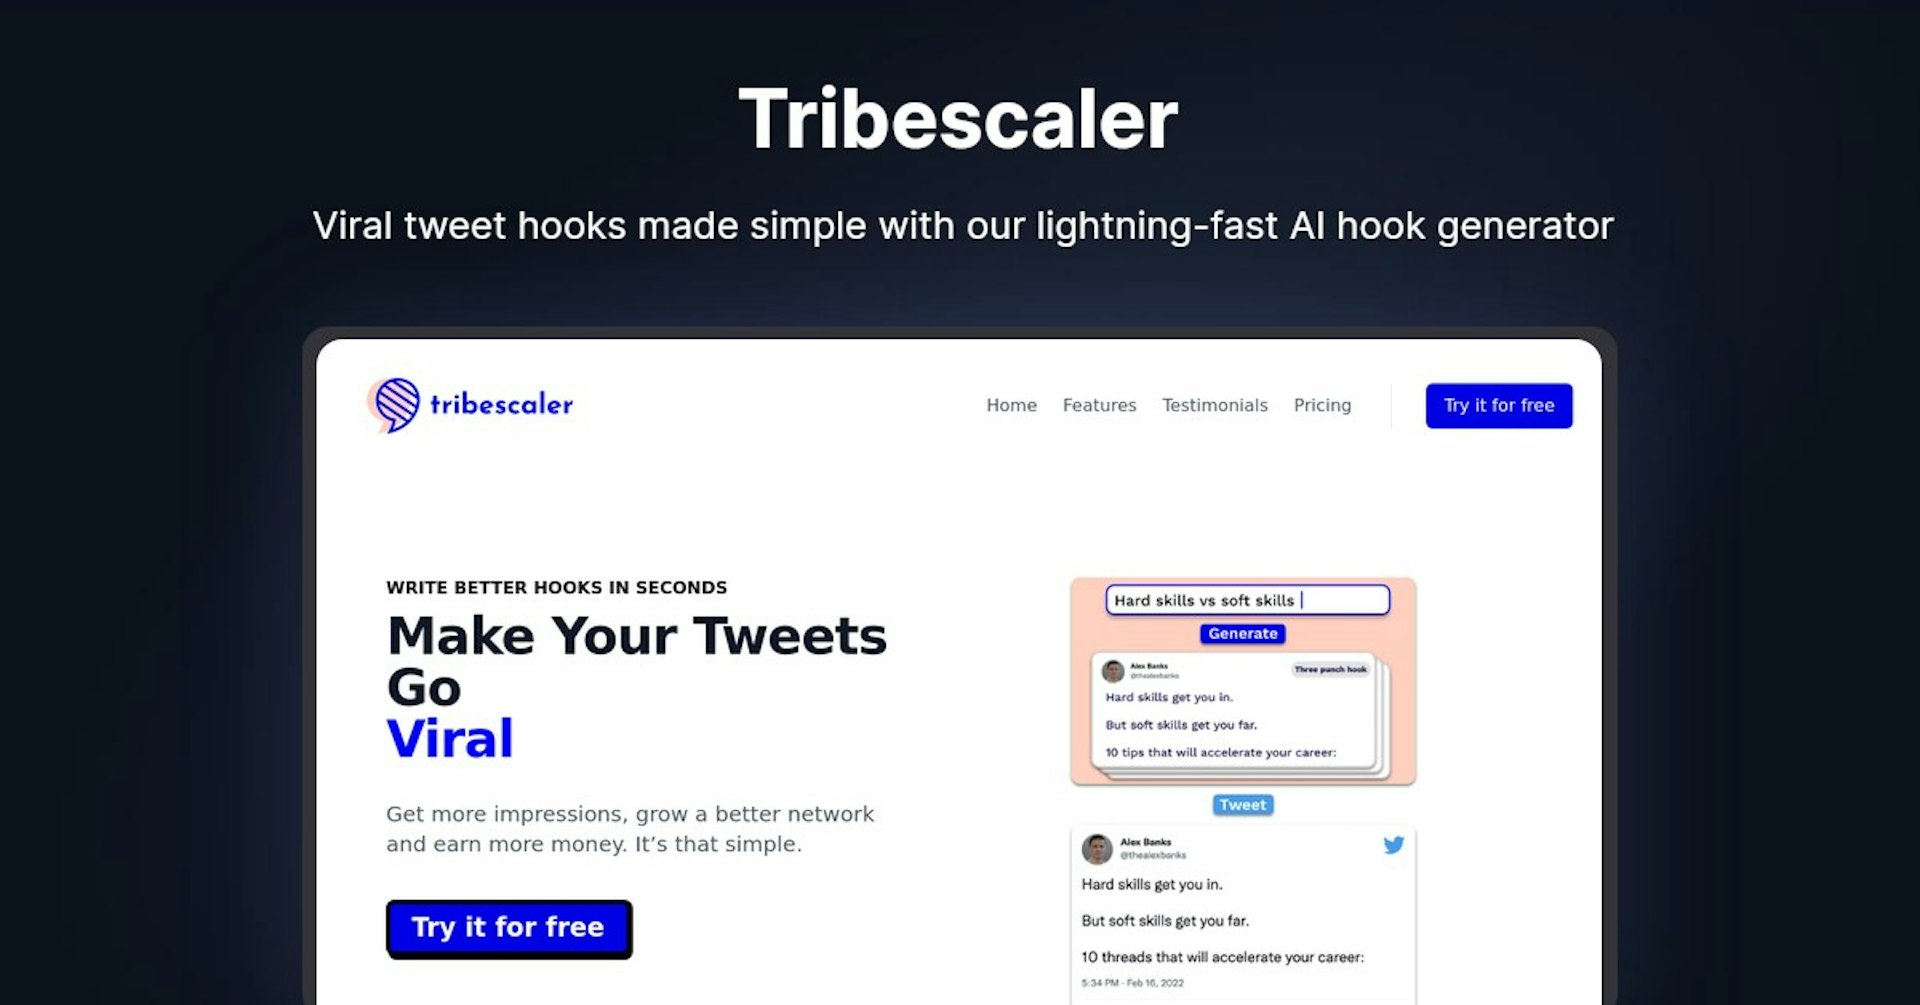 Tribescaler